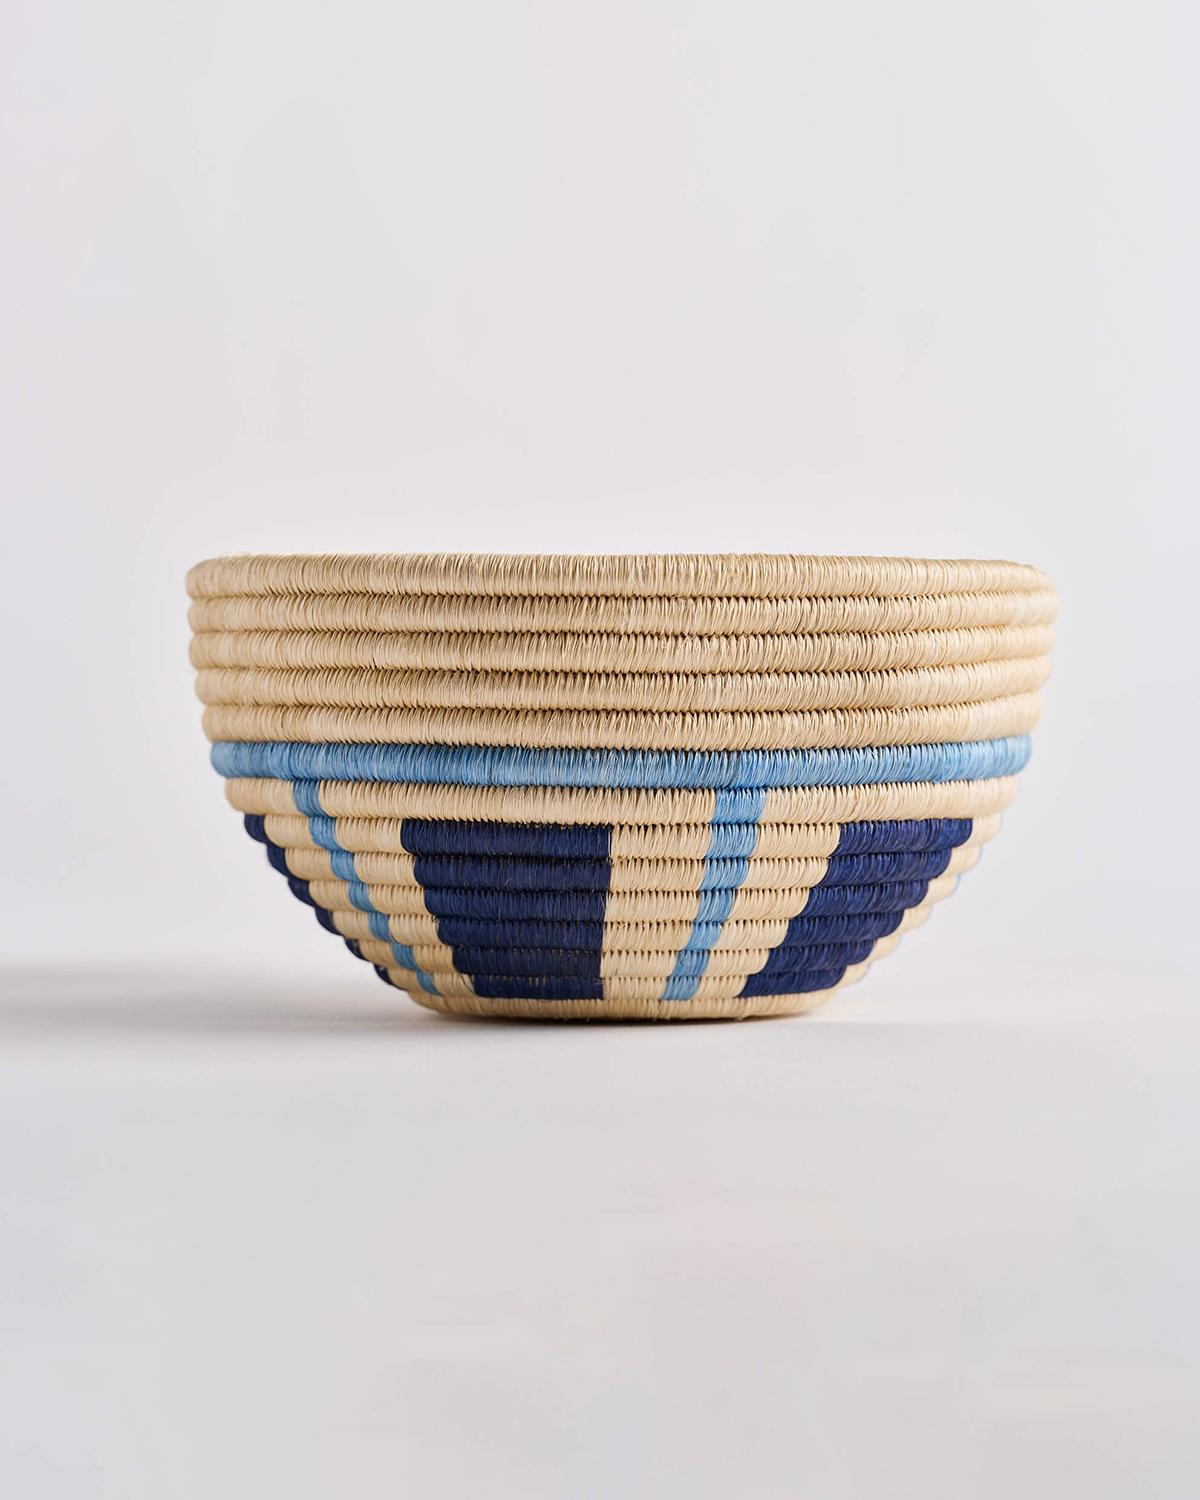 Hand-Woven Mar Handwoven Fruit Bowl made of Fique Fiber For Sale